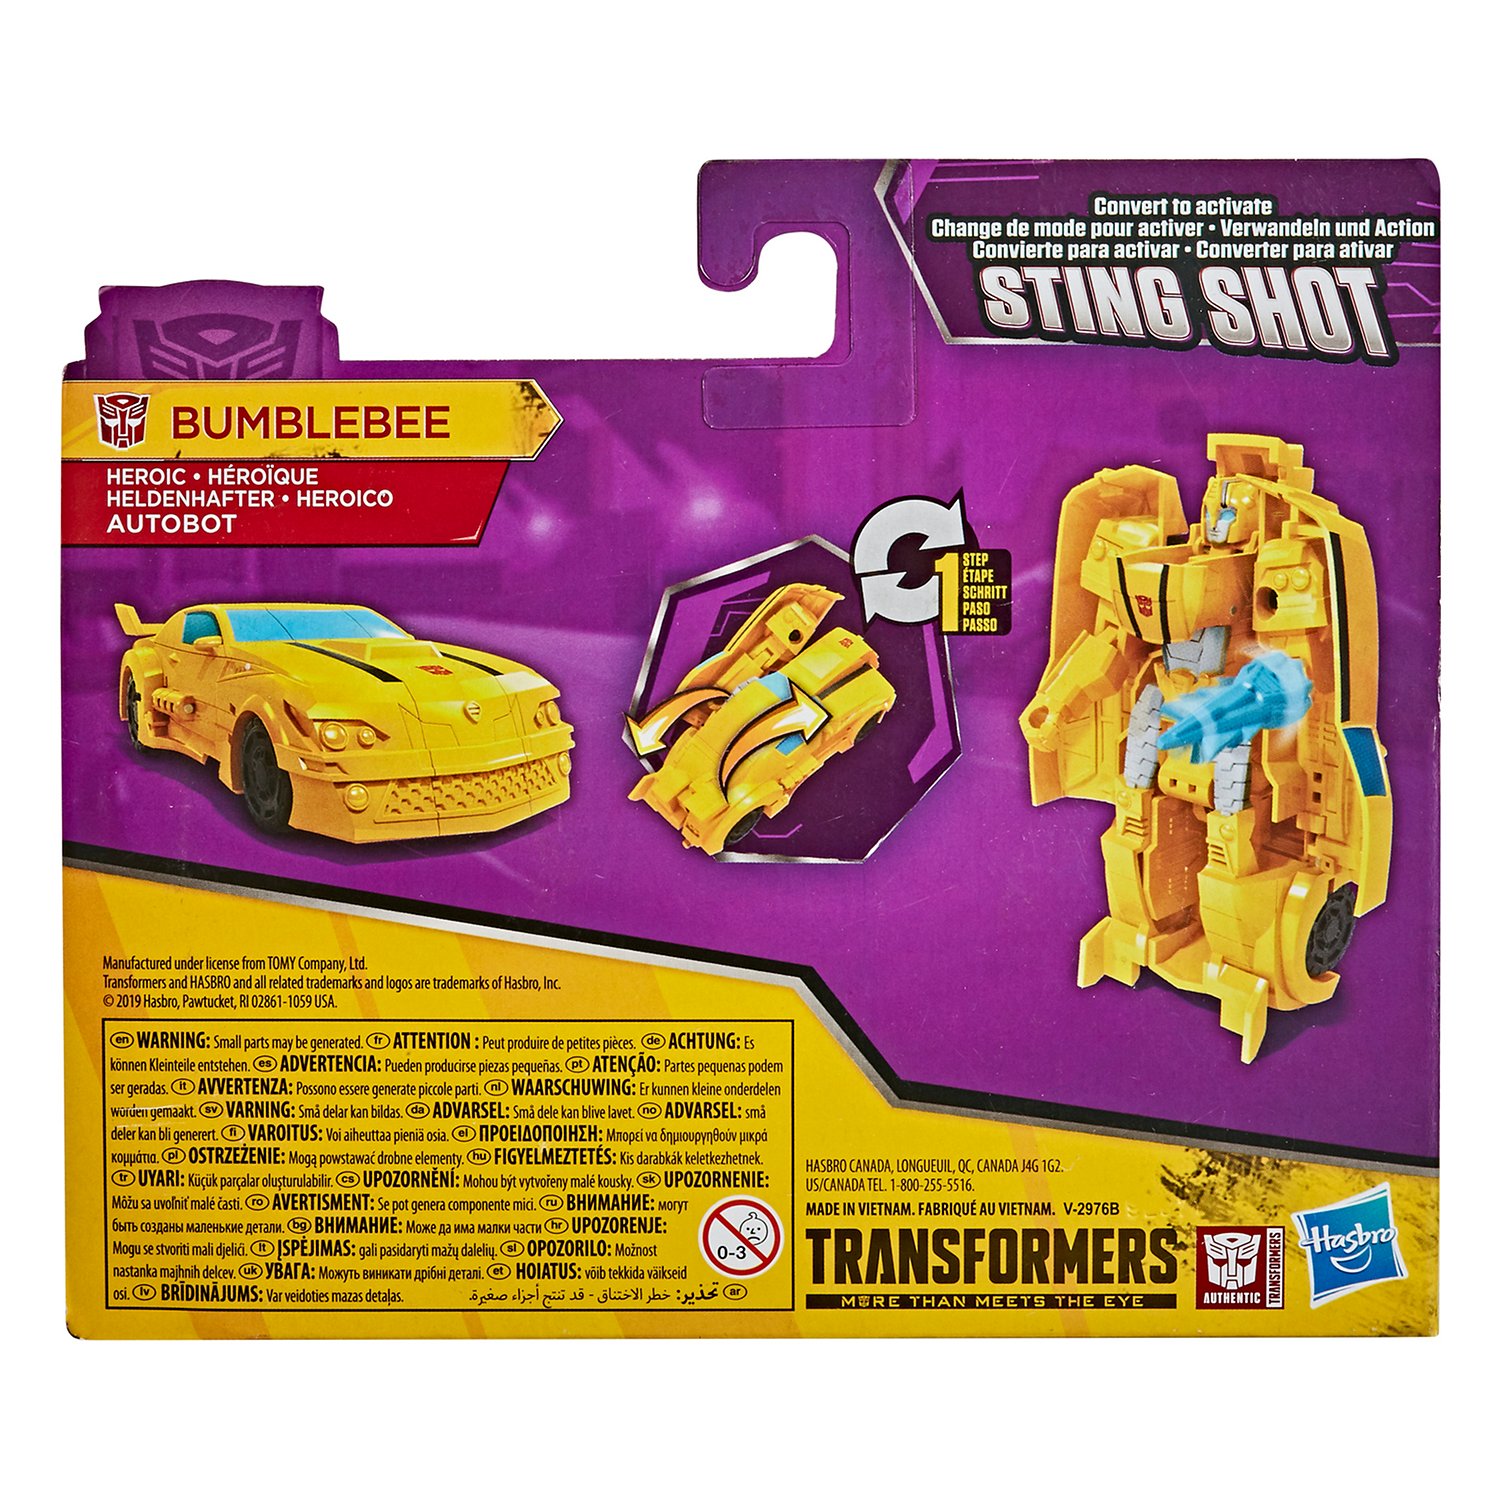 Фигурка Transformers E3642 Бамблби Кибервселенная Уан-степ